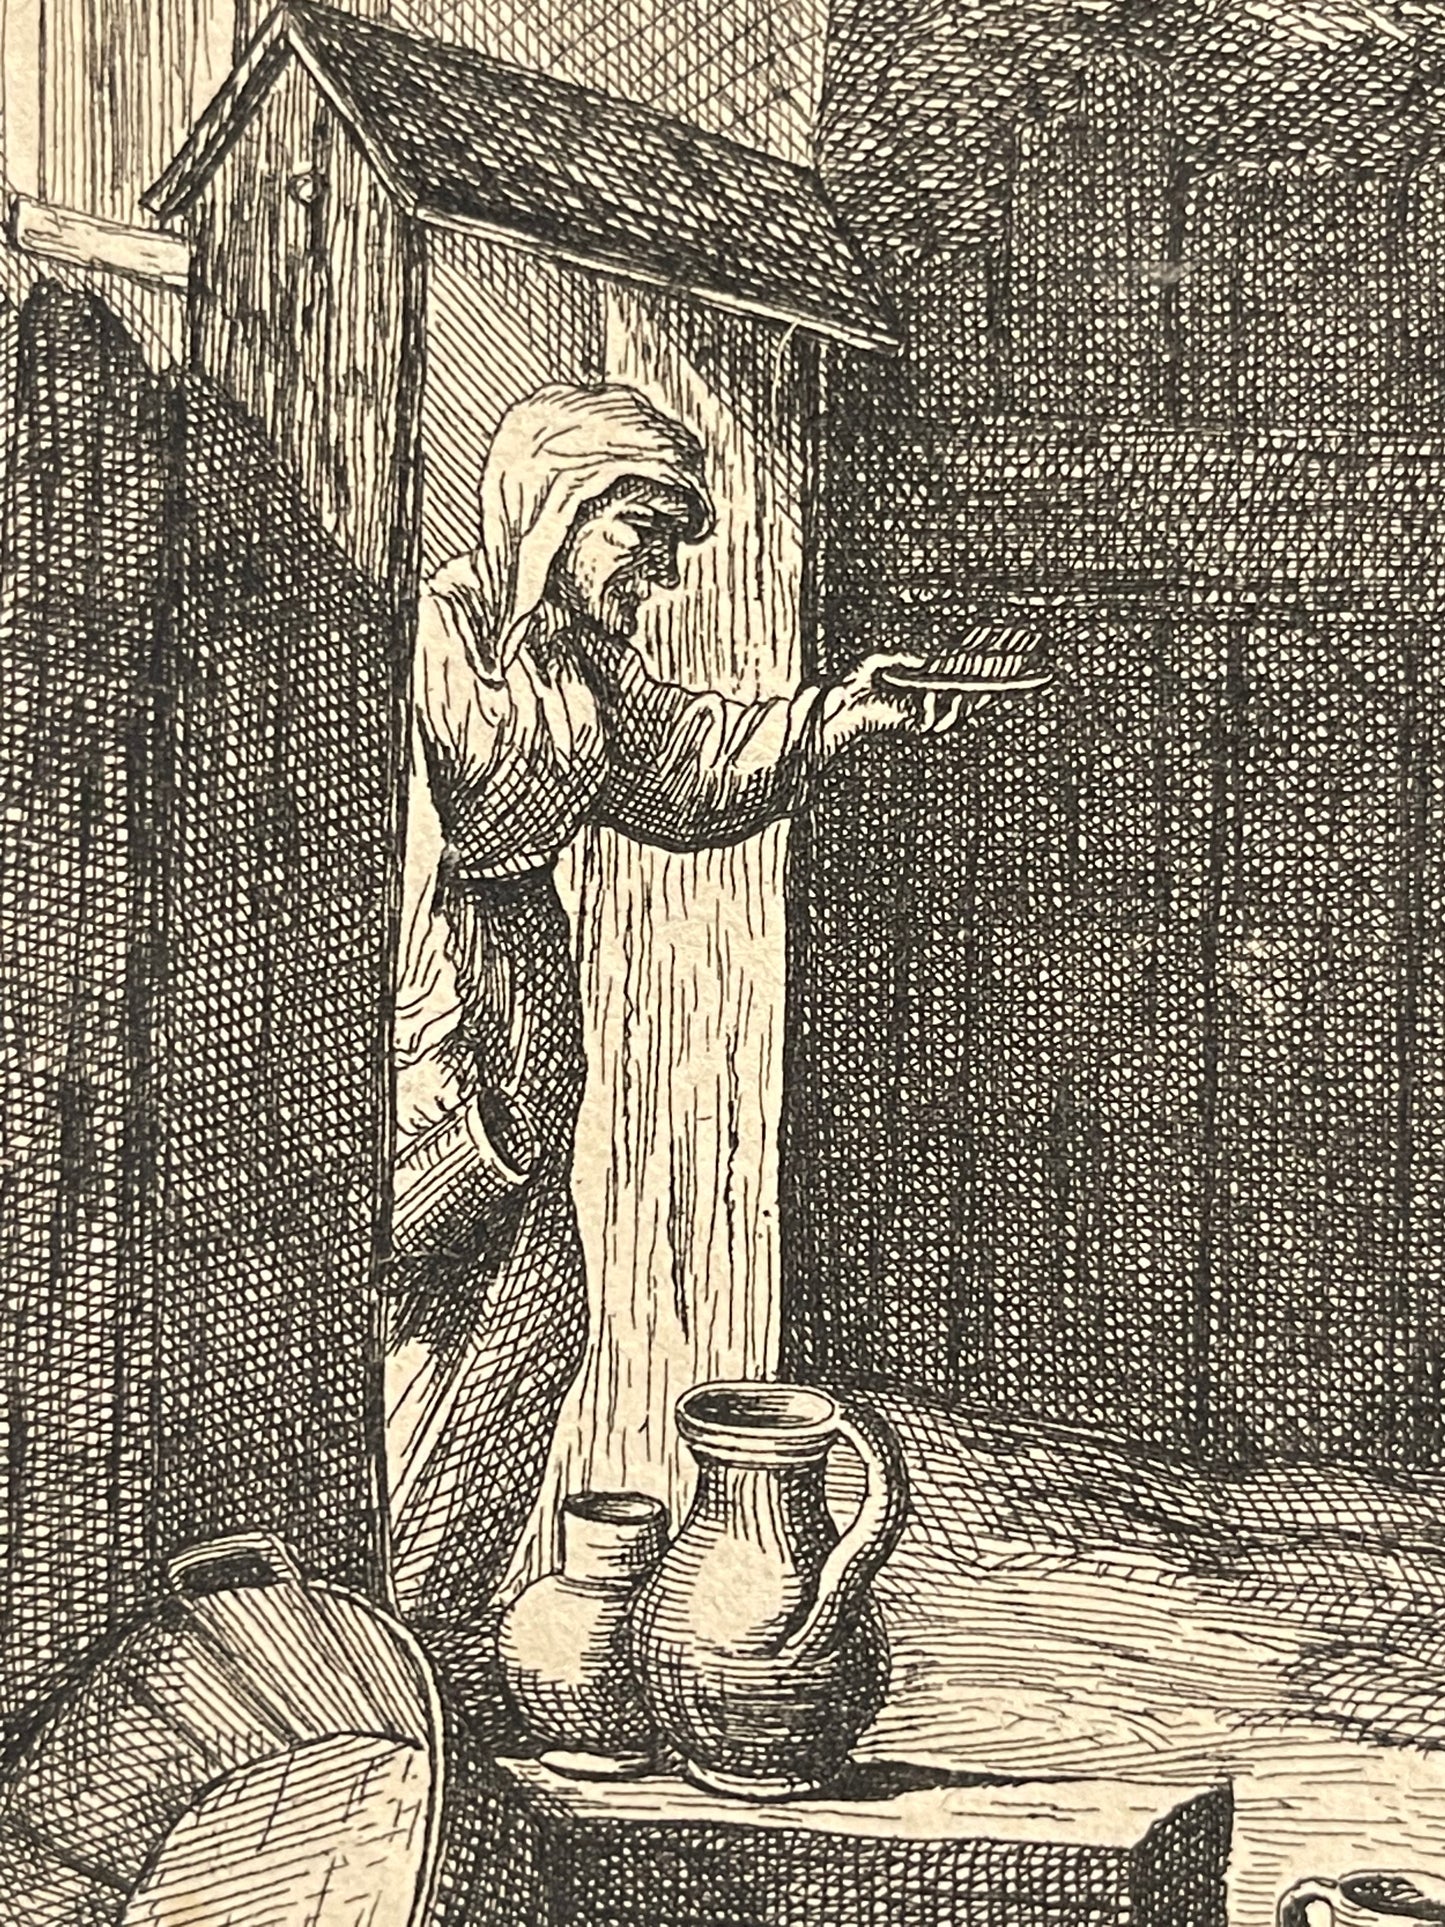 David Teniers II Etching: "Five Peasants Gathered around a Barrel"